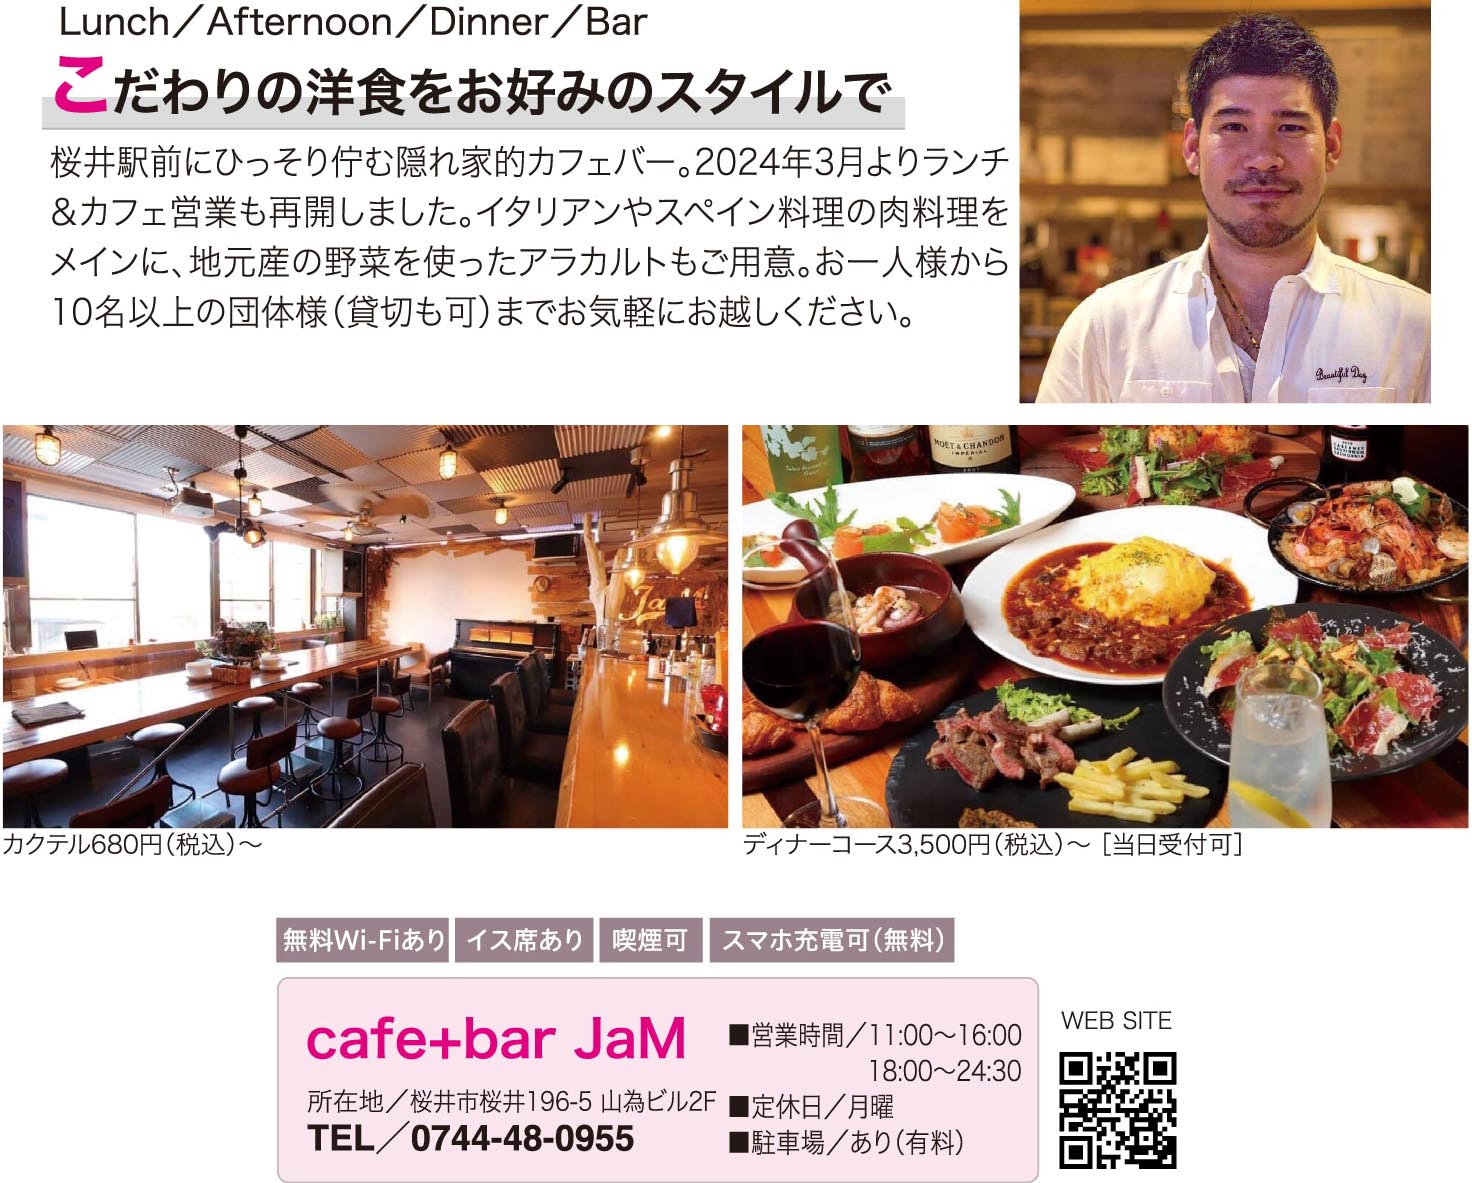 cafe bar JaM 桜井's image 1